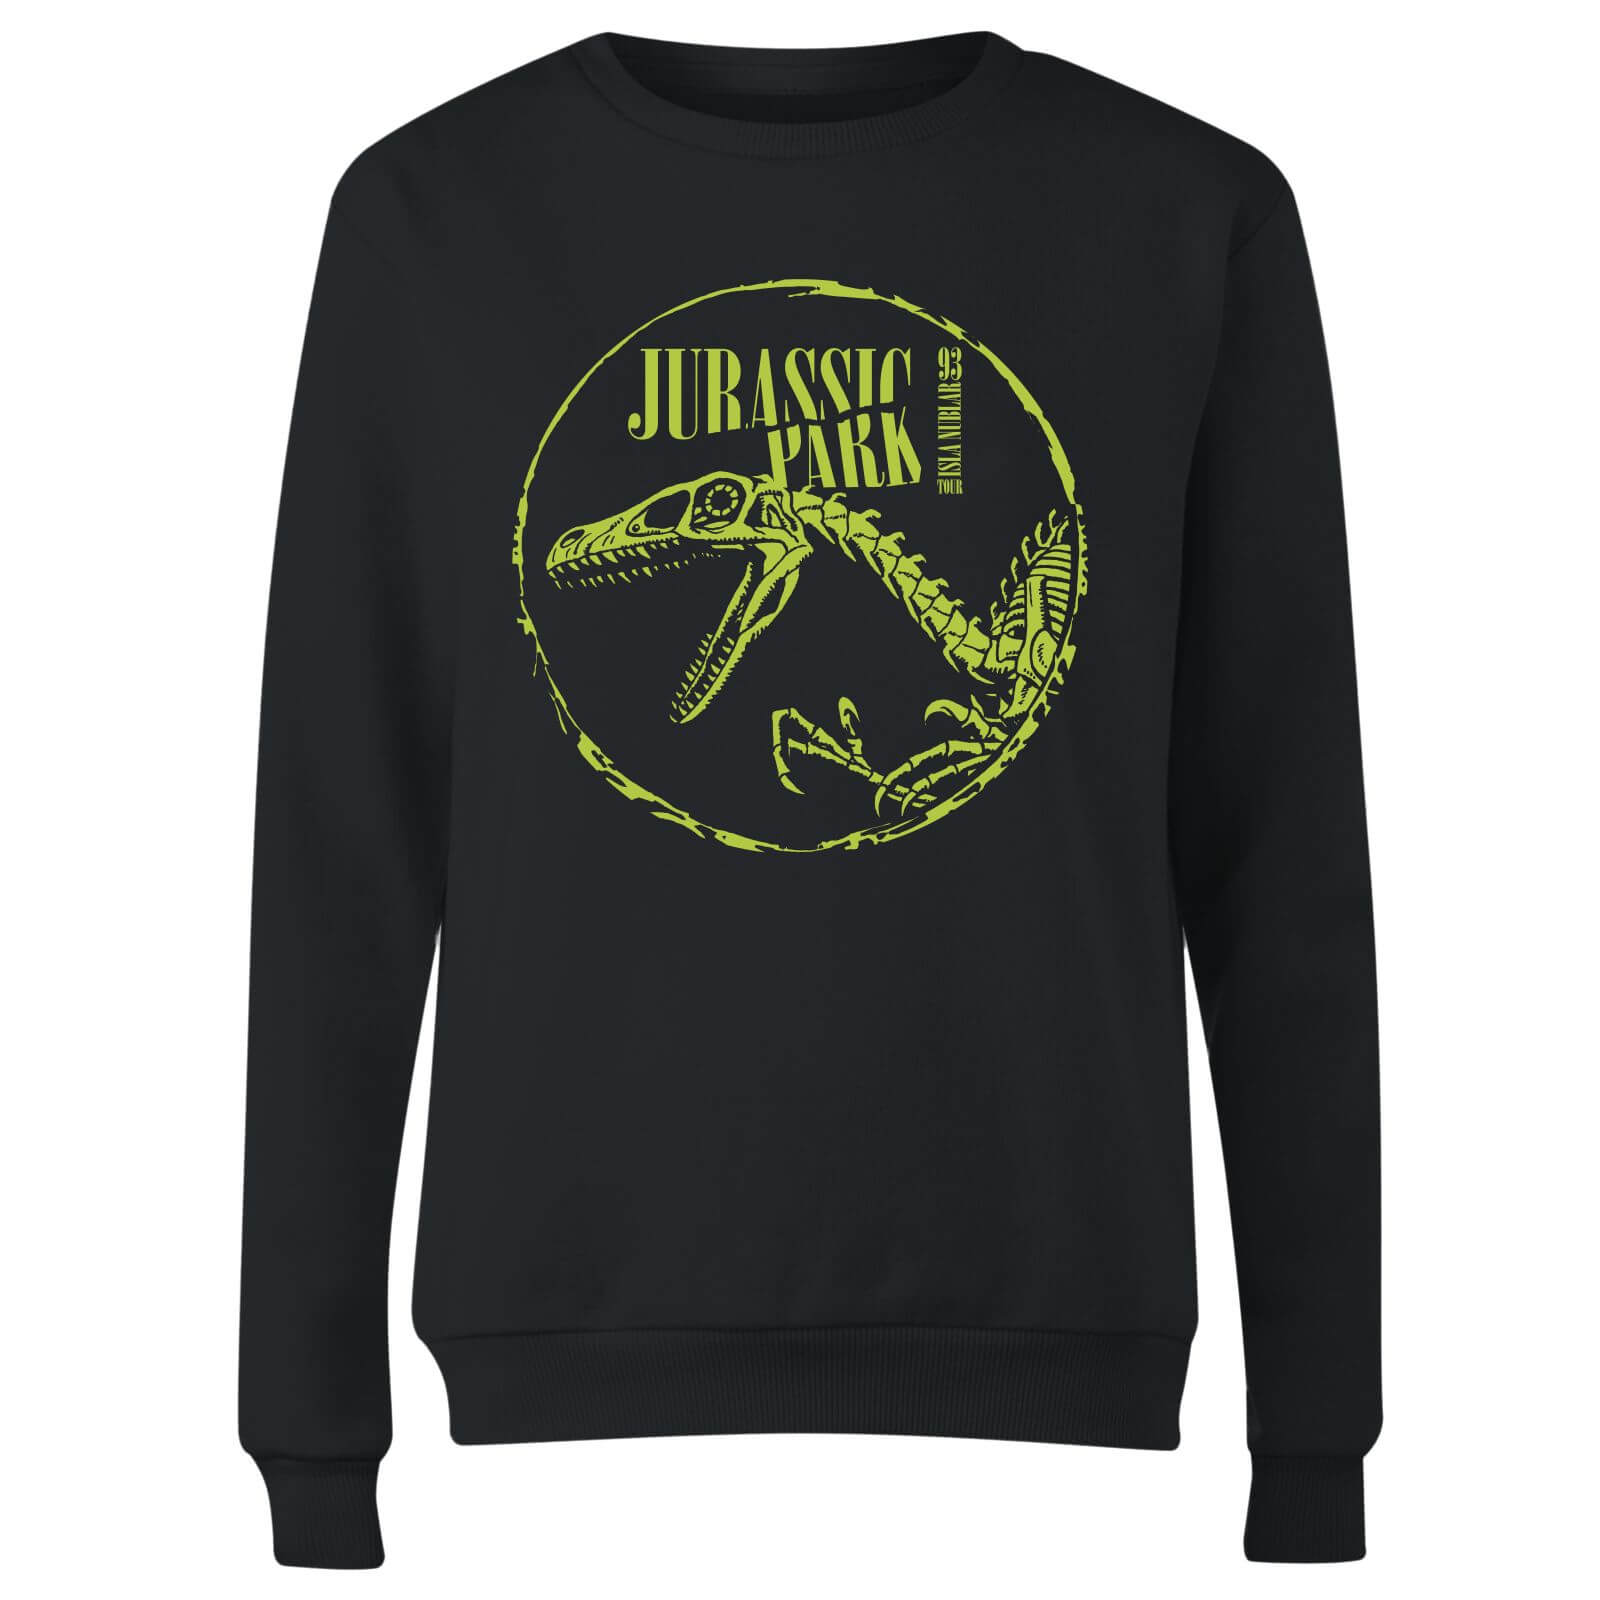 Jurassic Park Skell Women's Sweatshirt - Black - S